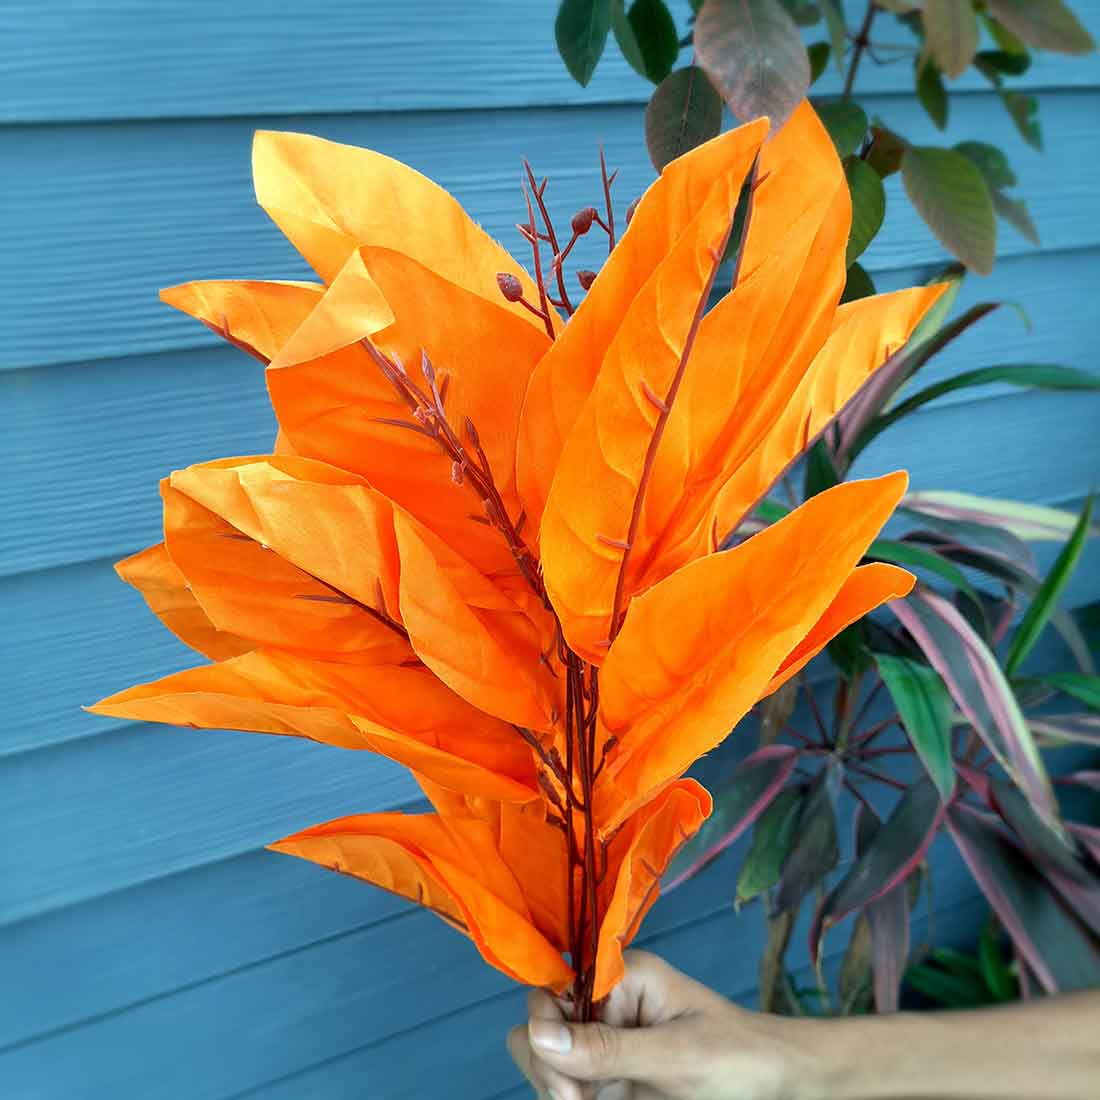 Artificial Flowers Bunch- Apkamart #color_Orange